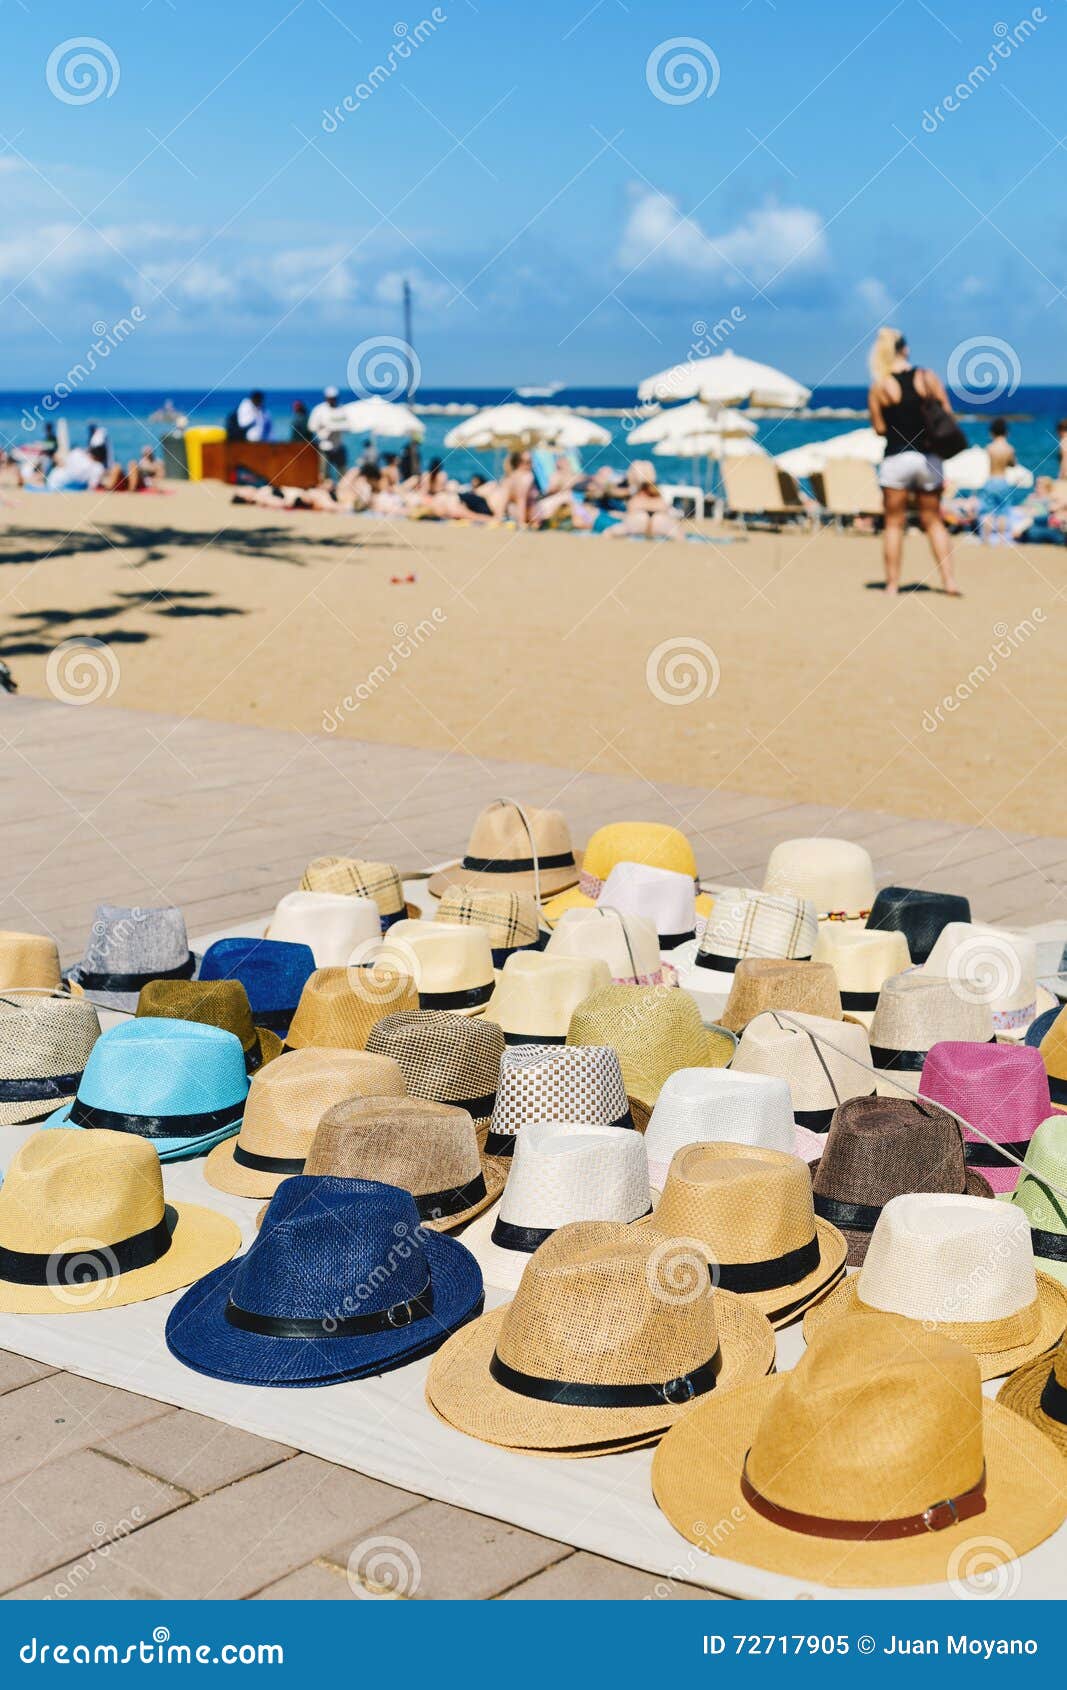 hats on sale at la barceloneta beach in barcelona, spain